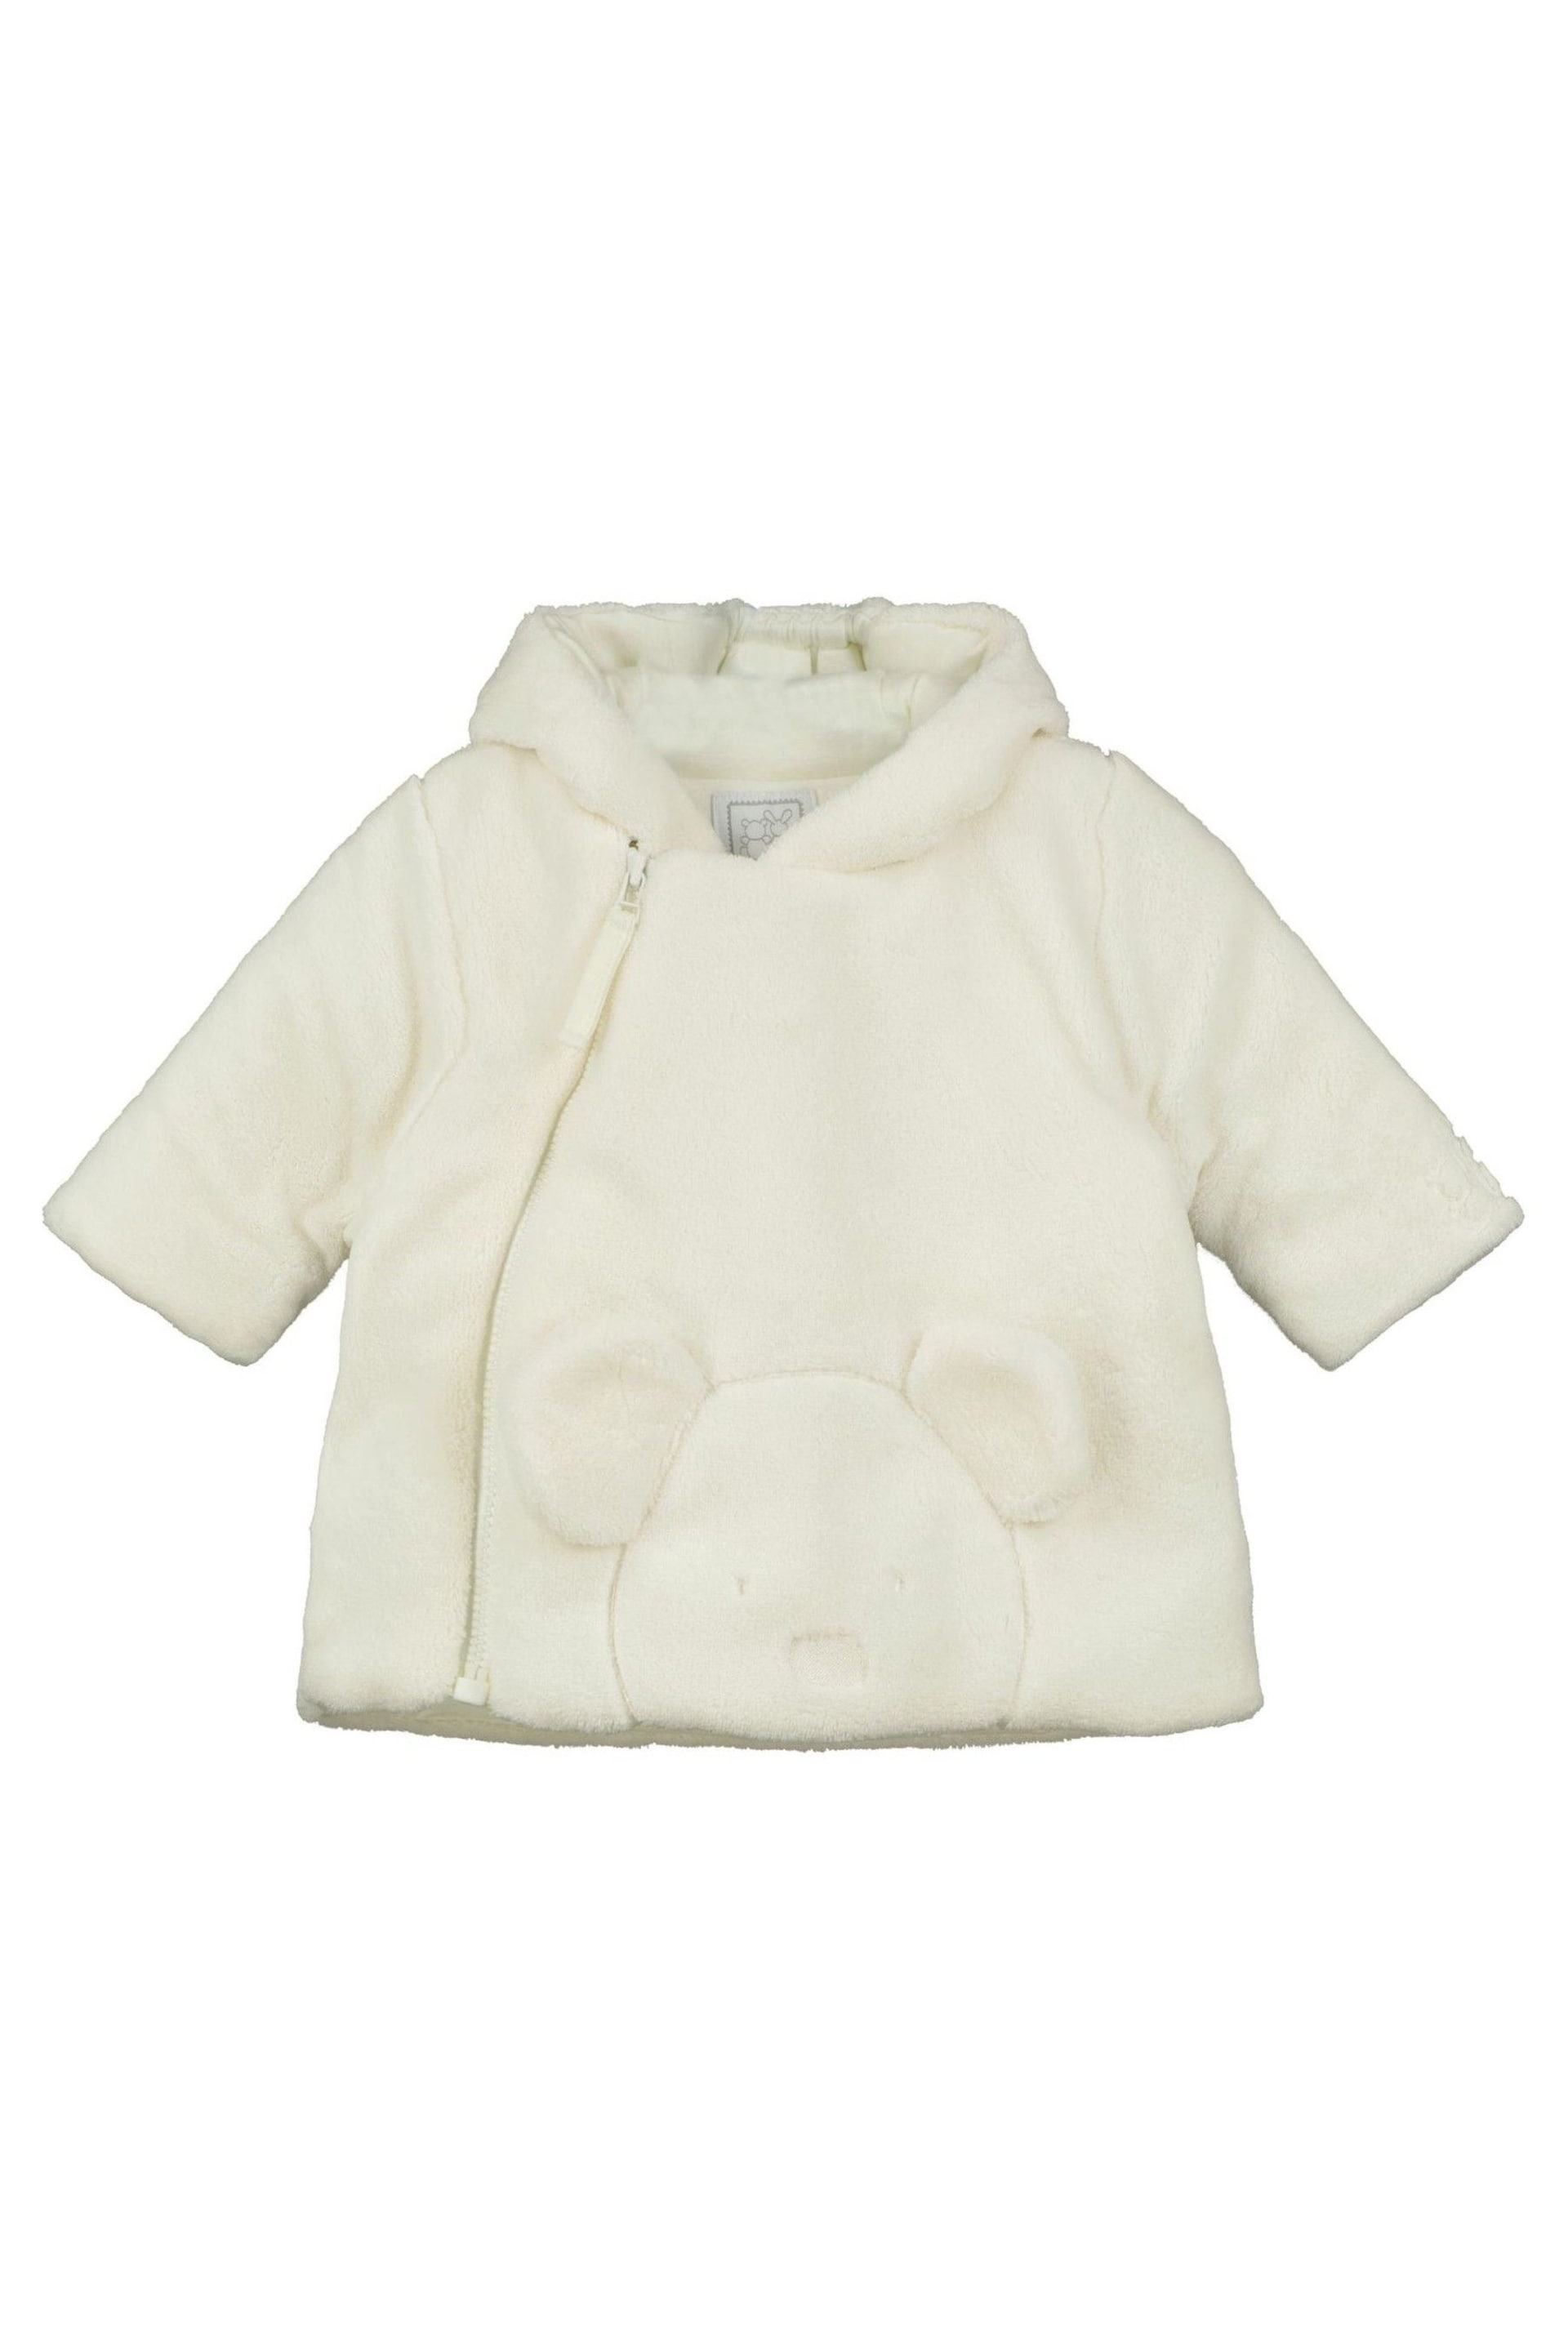 Emile Et Rose Deep Pile Fleece Ivory Jacket with 3D Teddy & Hood - Image 2 of 3